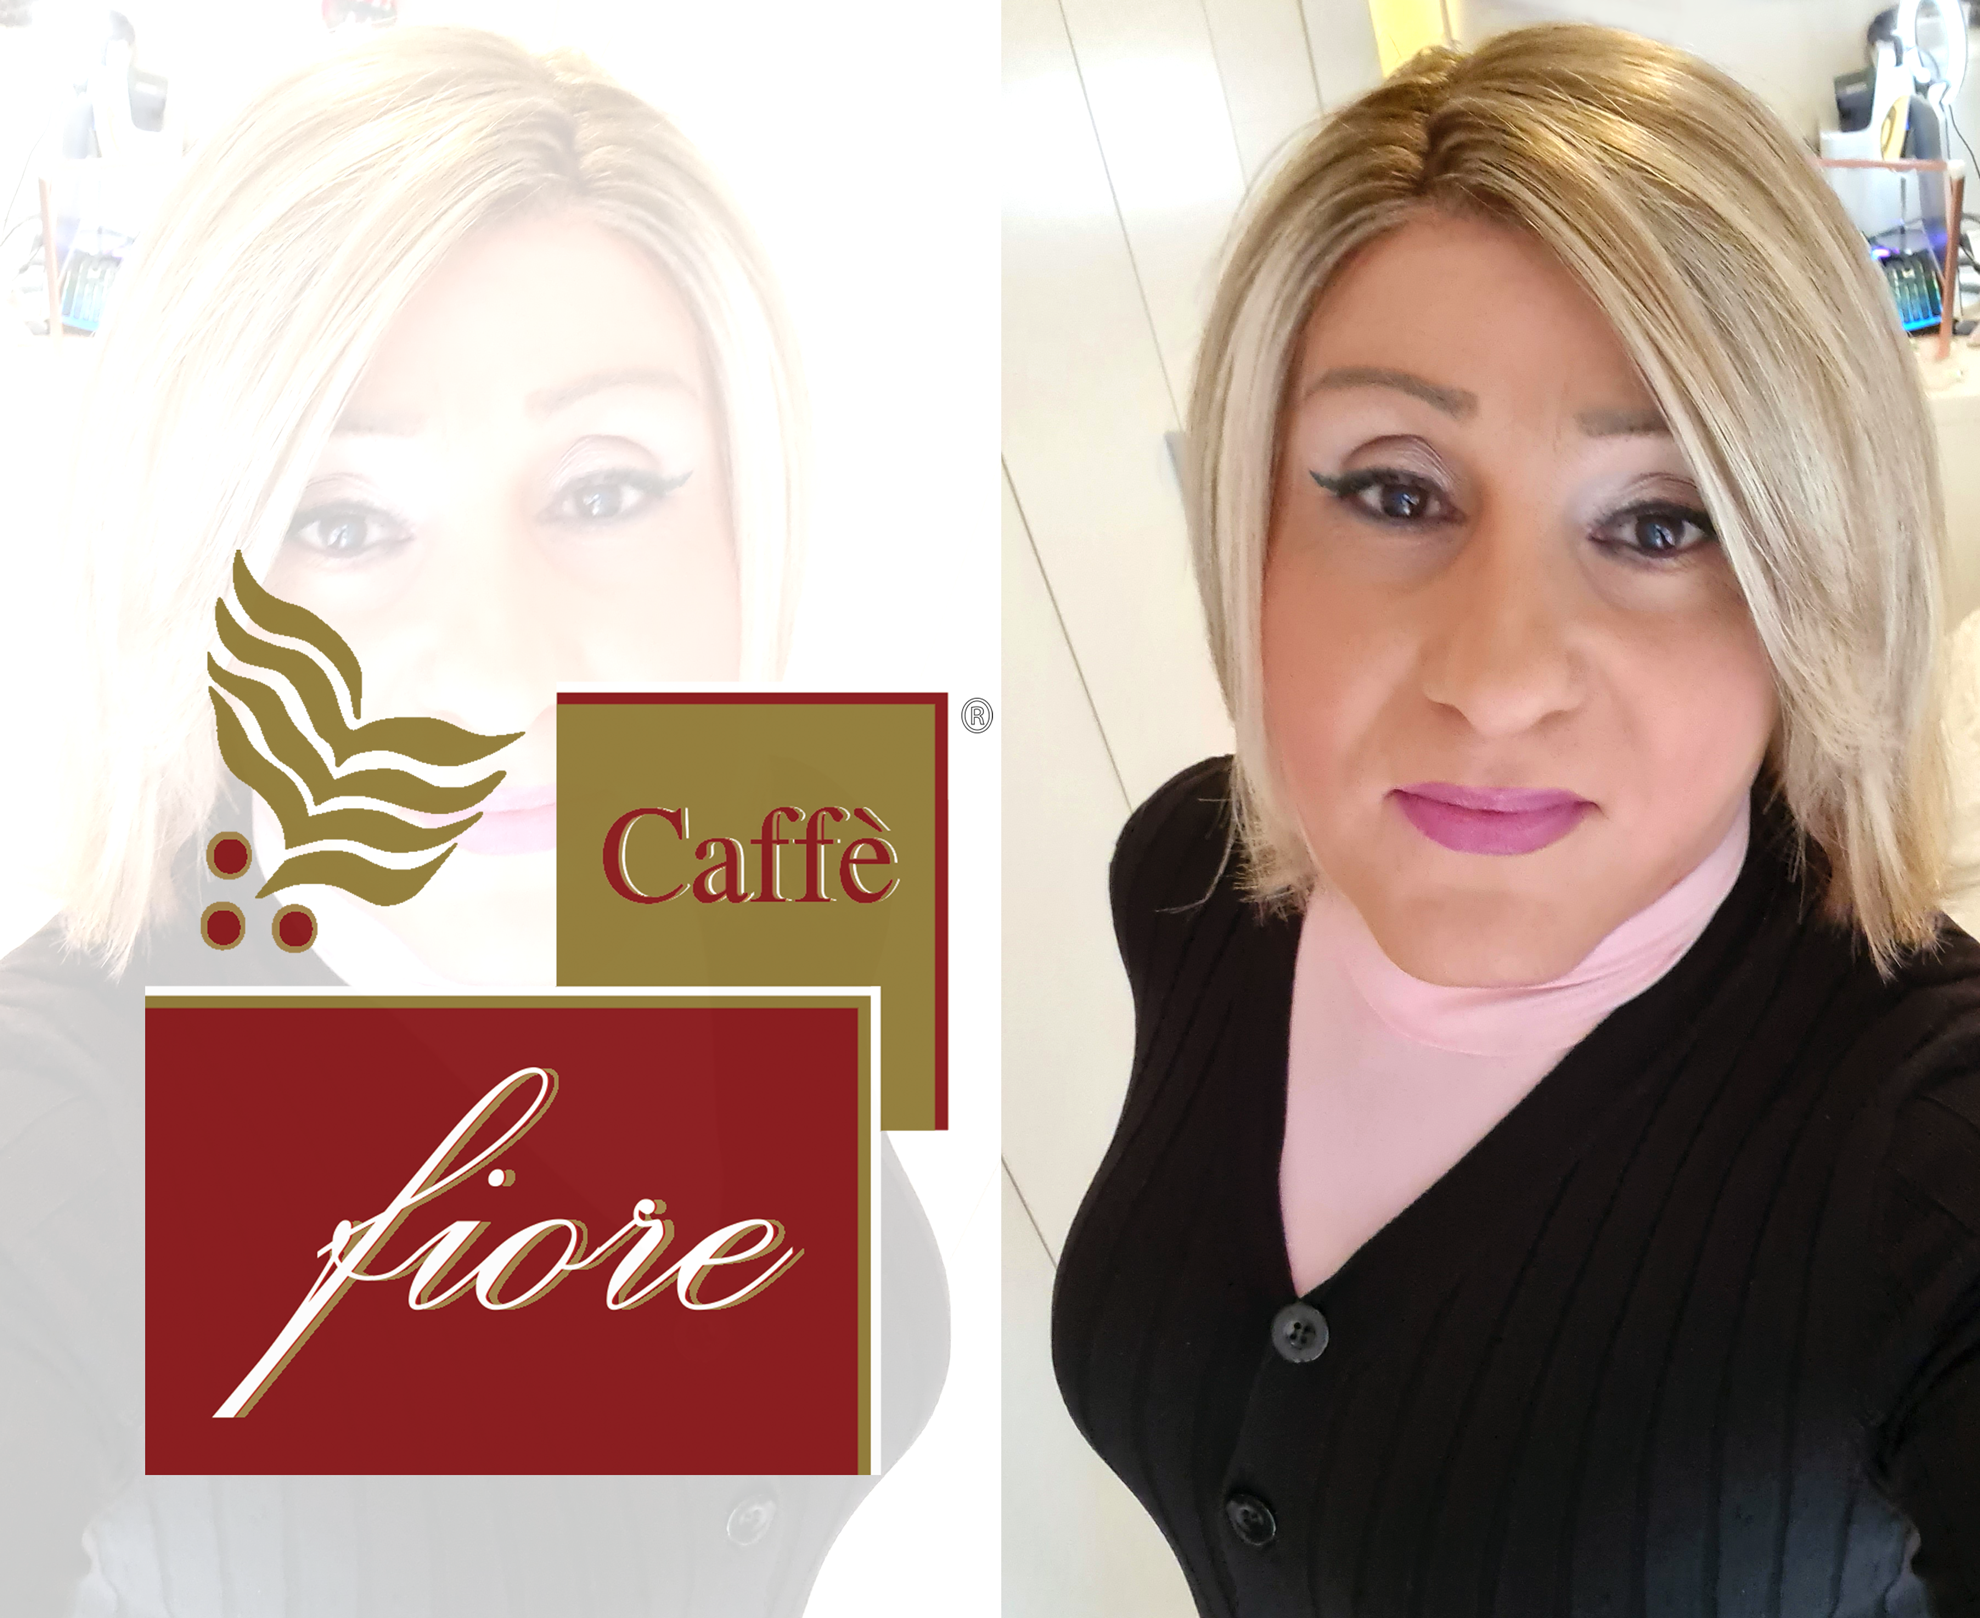 719-caffe-fiore-promo-20221202-dx